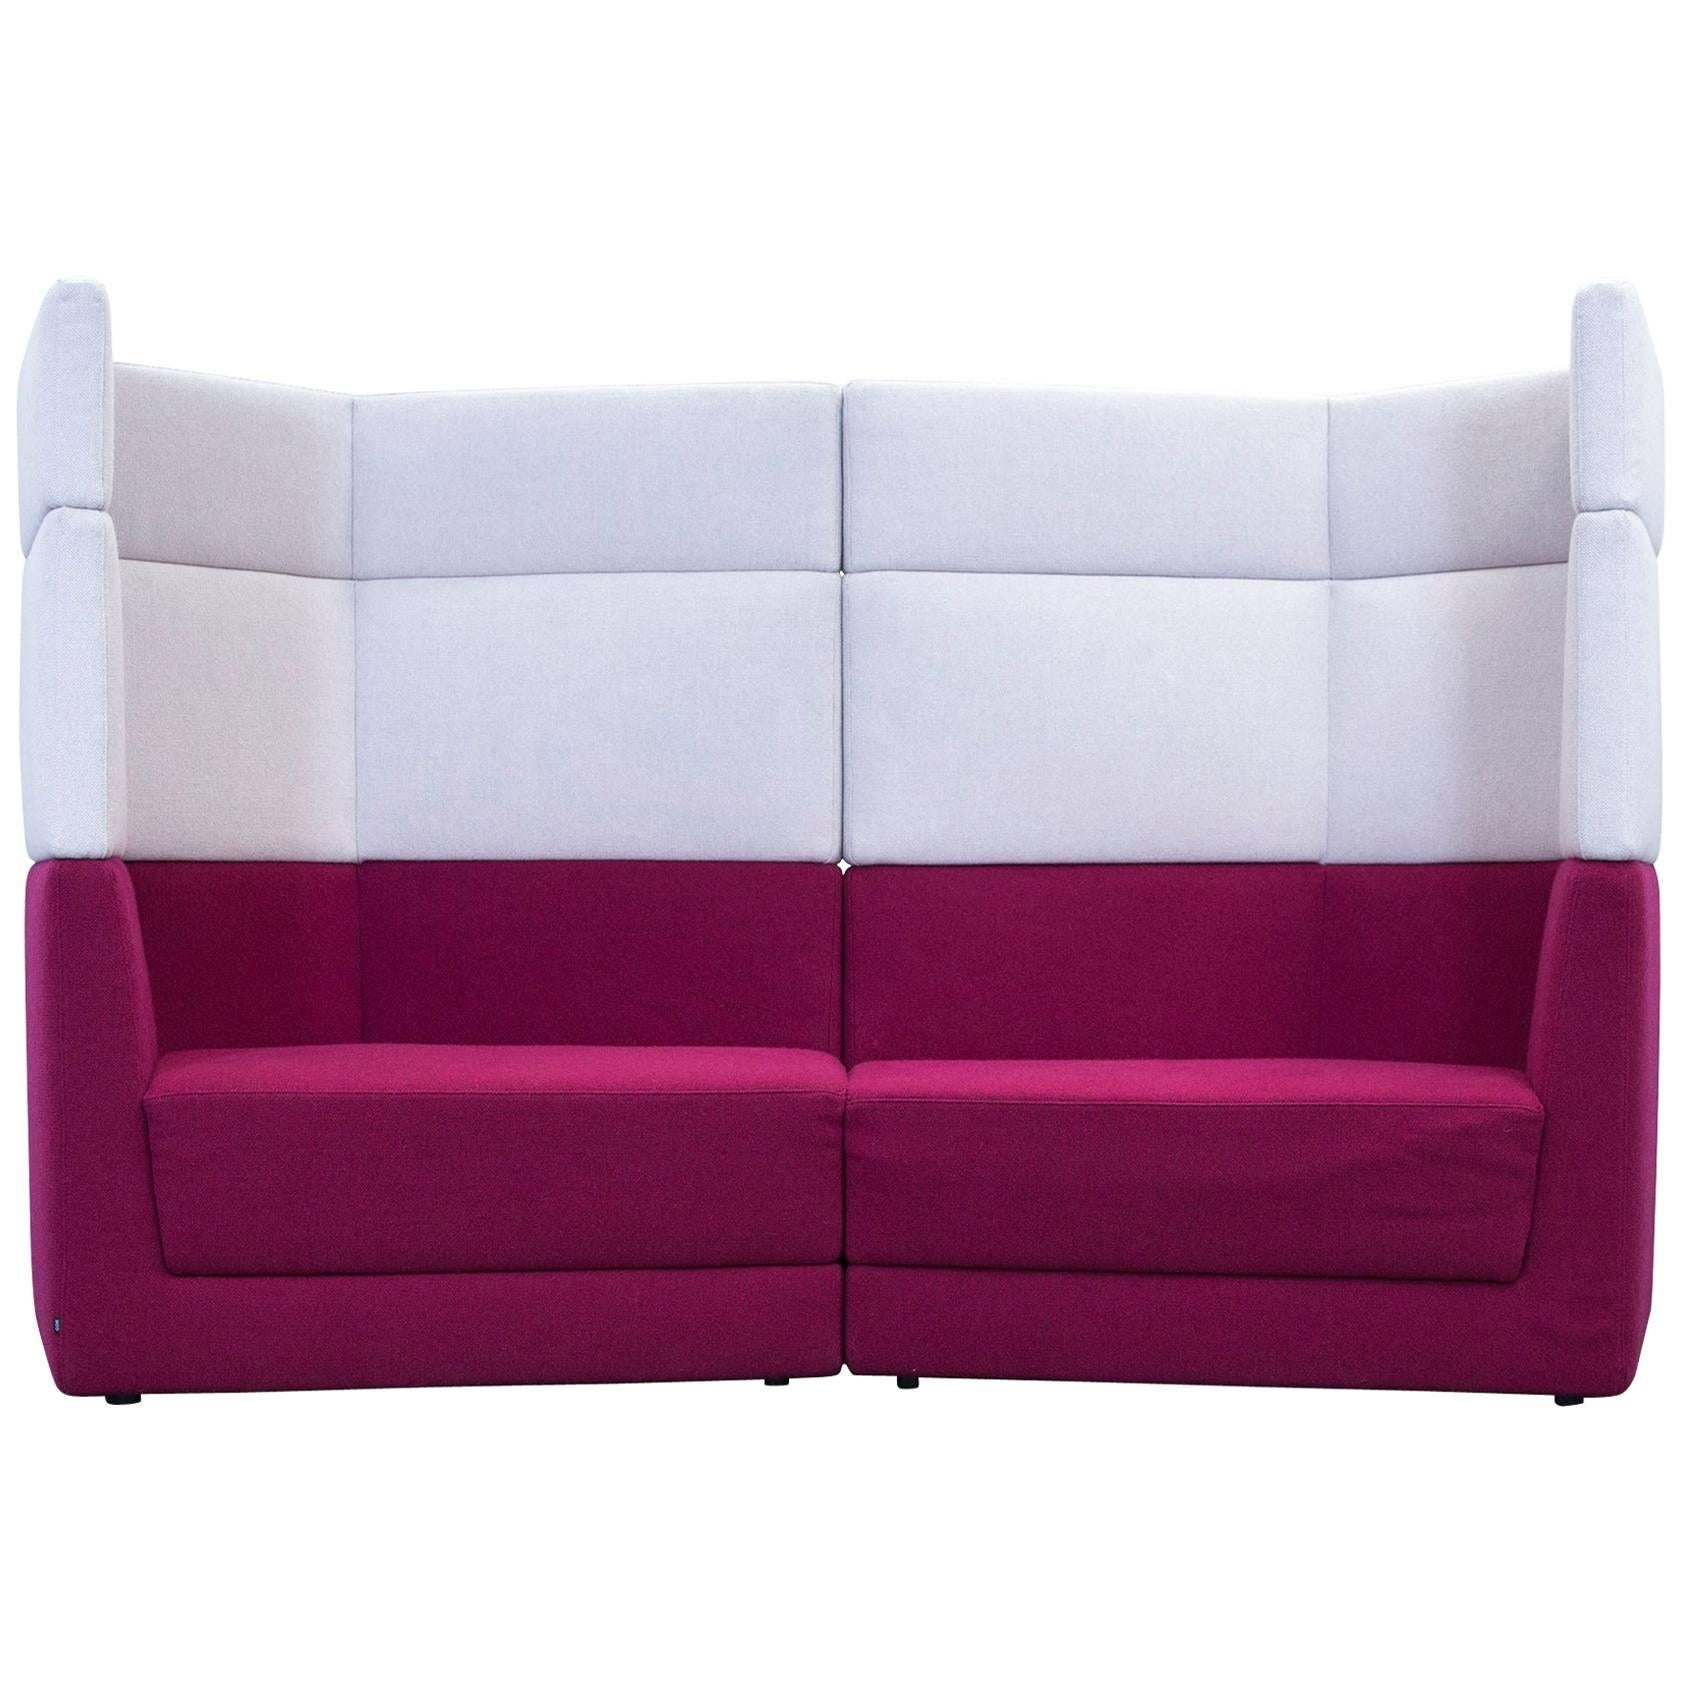 COR Scope Designer Sofa Fabric Violet Crème White Three-Seat Couch Modern